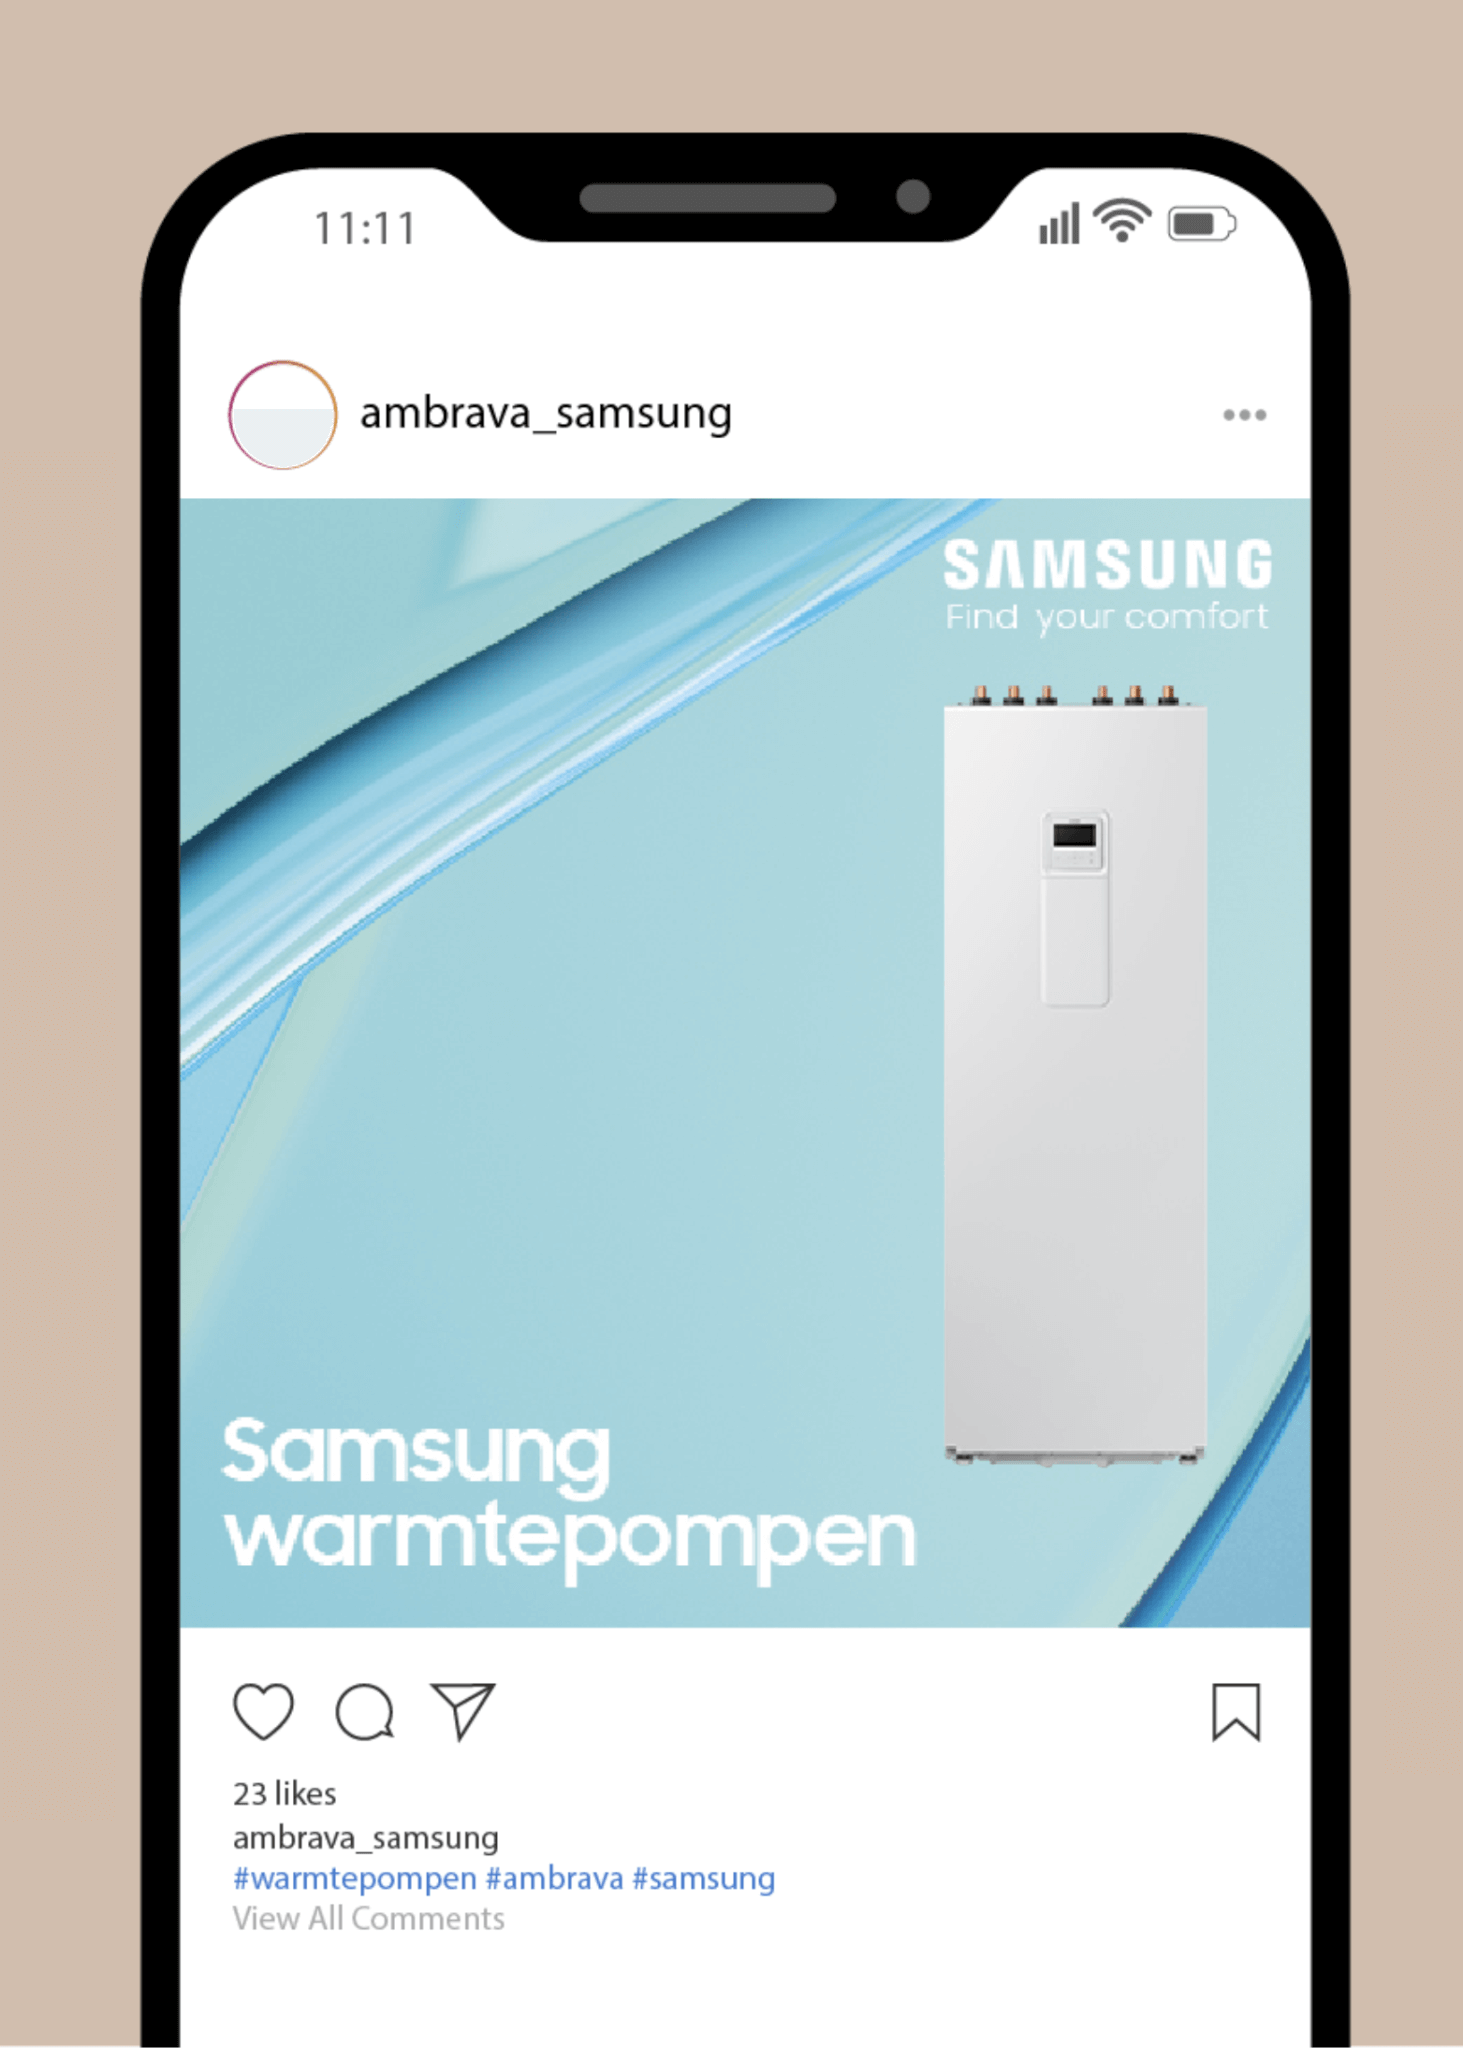 Ambrava Samsung ads on phone screen